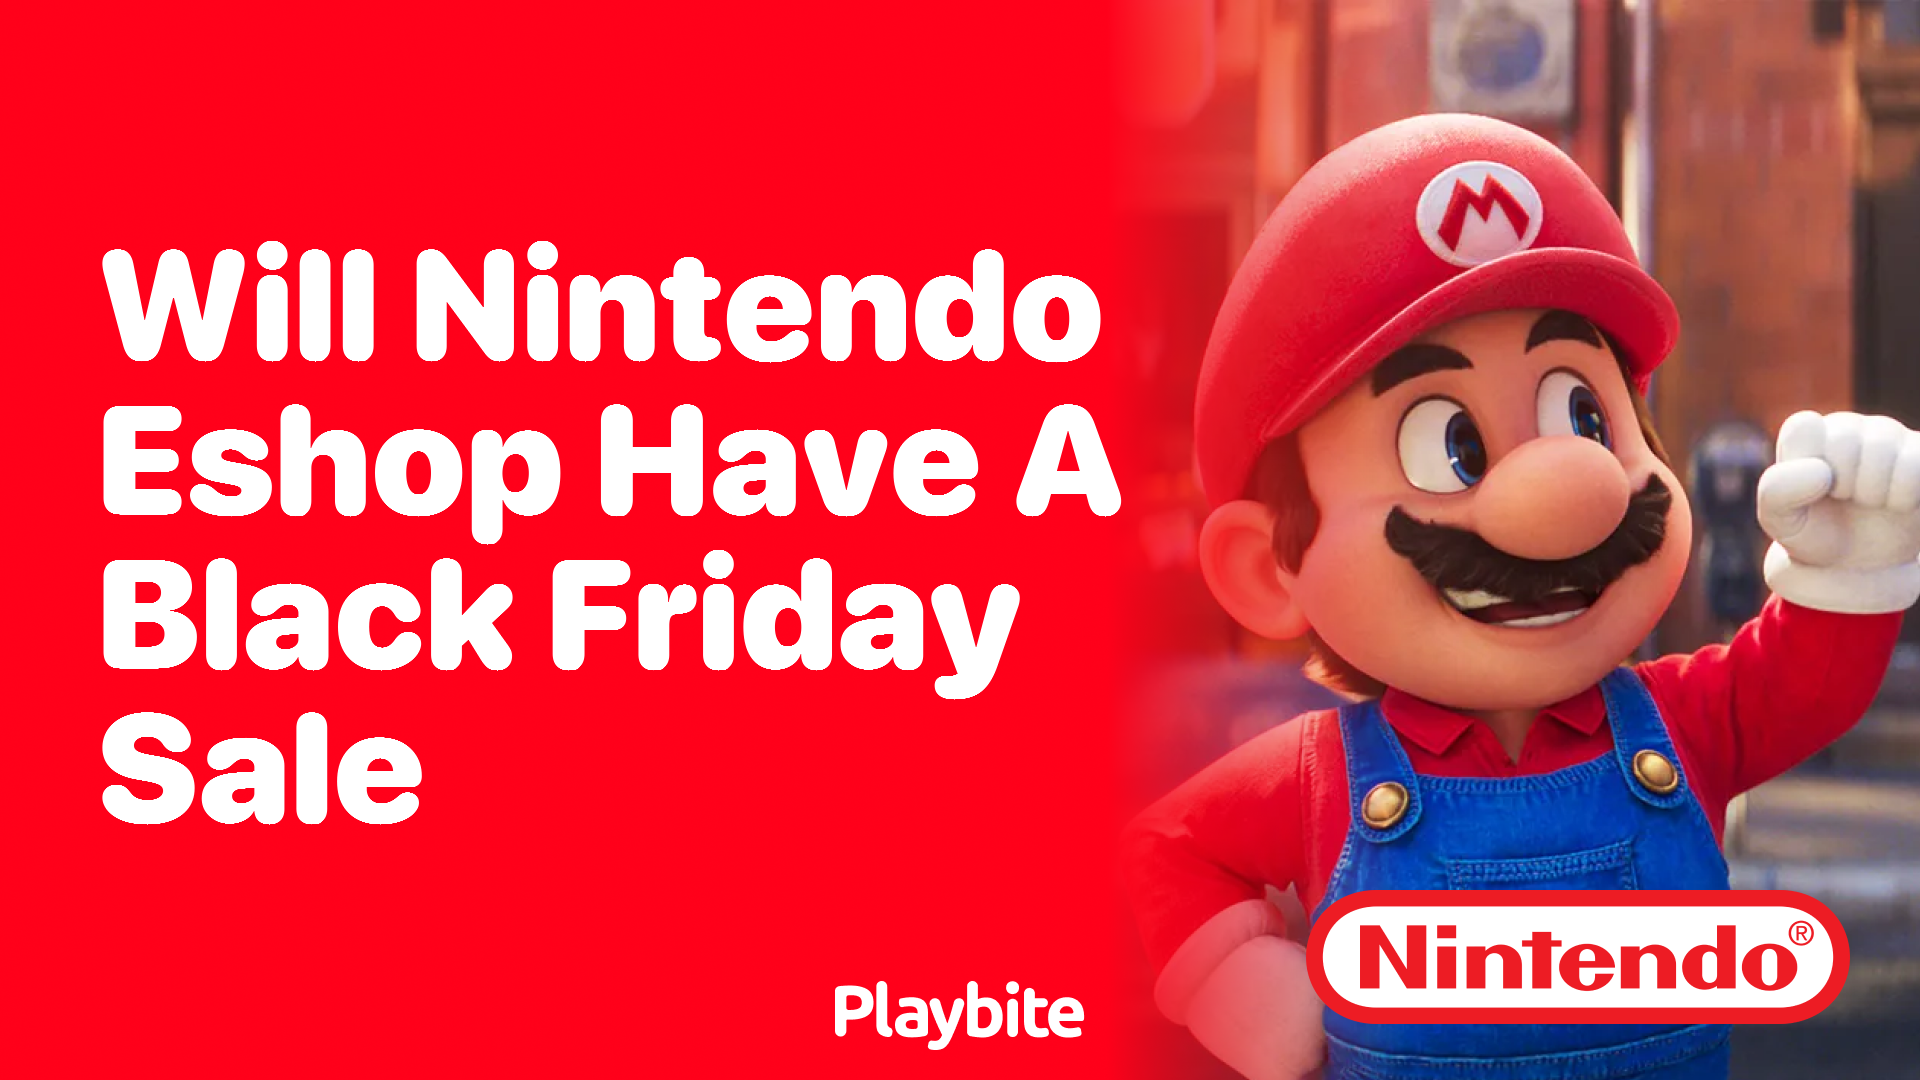 Will Nintendo eShop Have a Black Friday Sale?